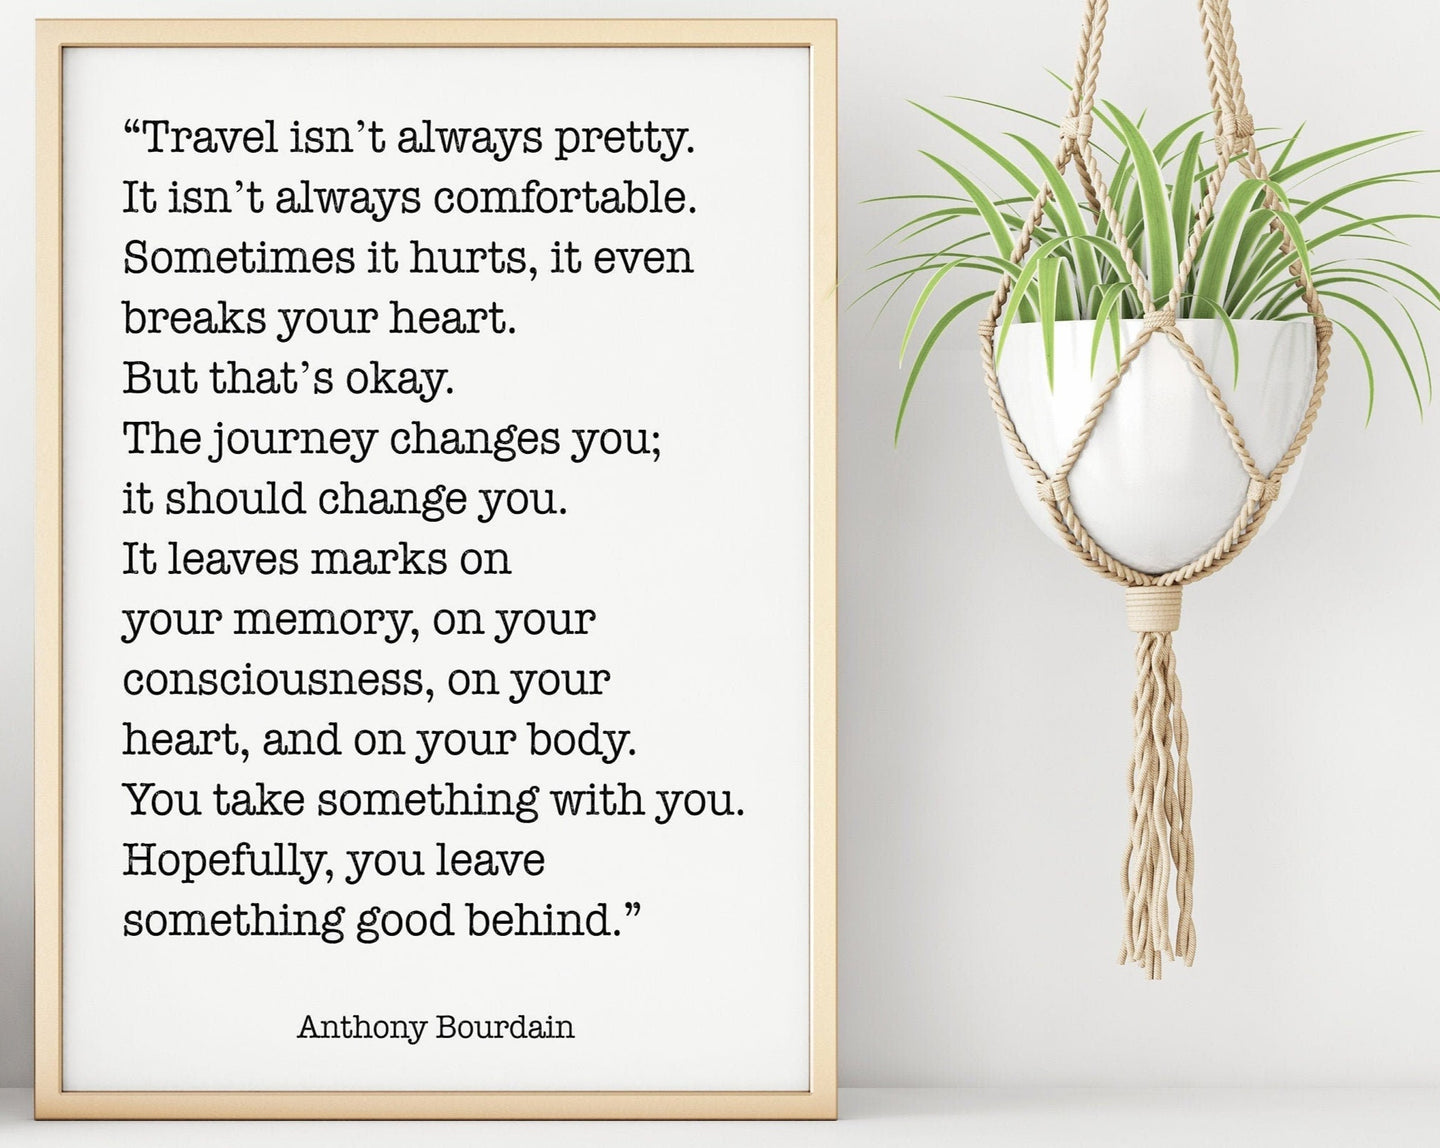 Anthony Bourdain Print - Travel isn't always pretty - Inspirational print for Home, Inspirational Bourdain quote